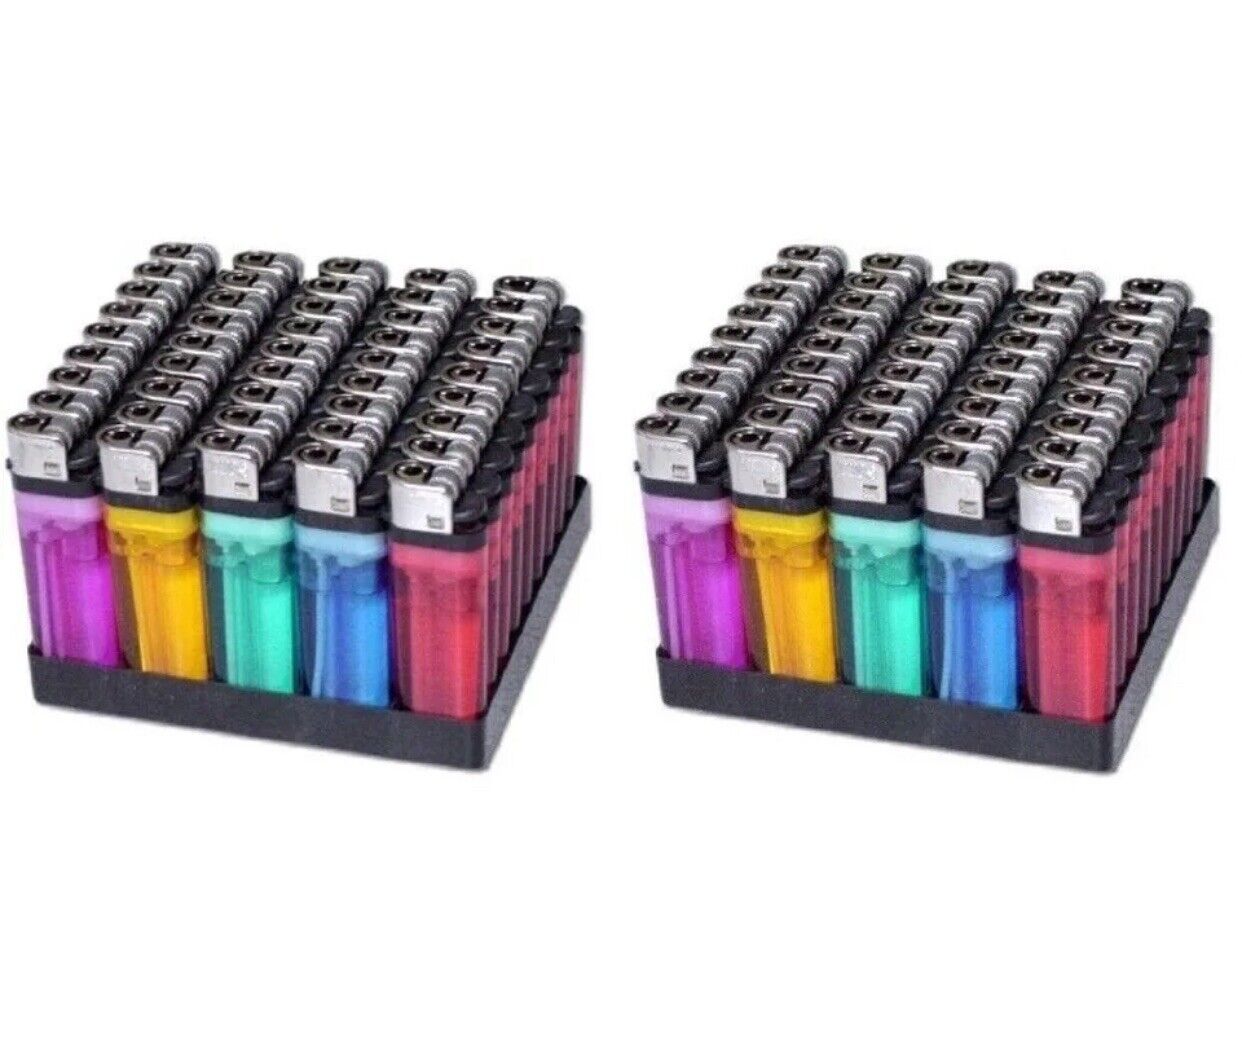 100 Pcs Full Size Disposable Butane Lighter Assorted Colors Wholesale Price *FSh